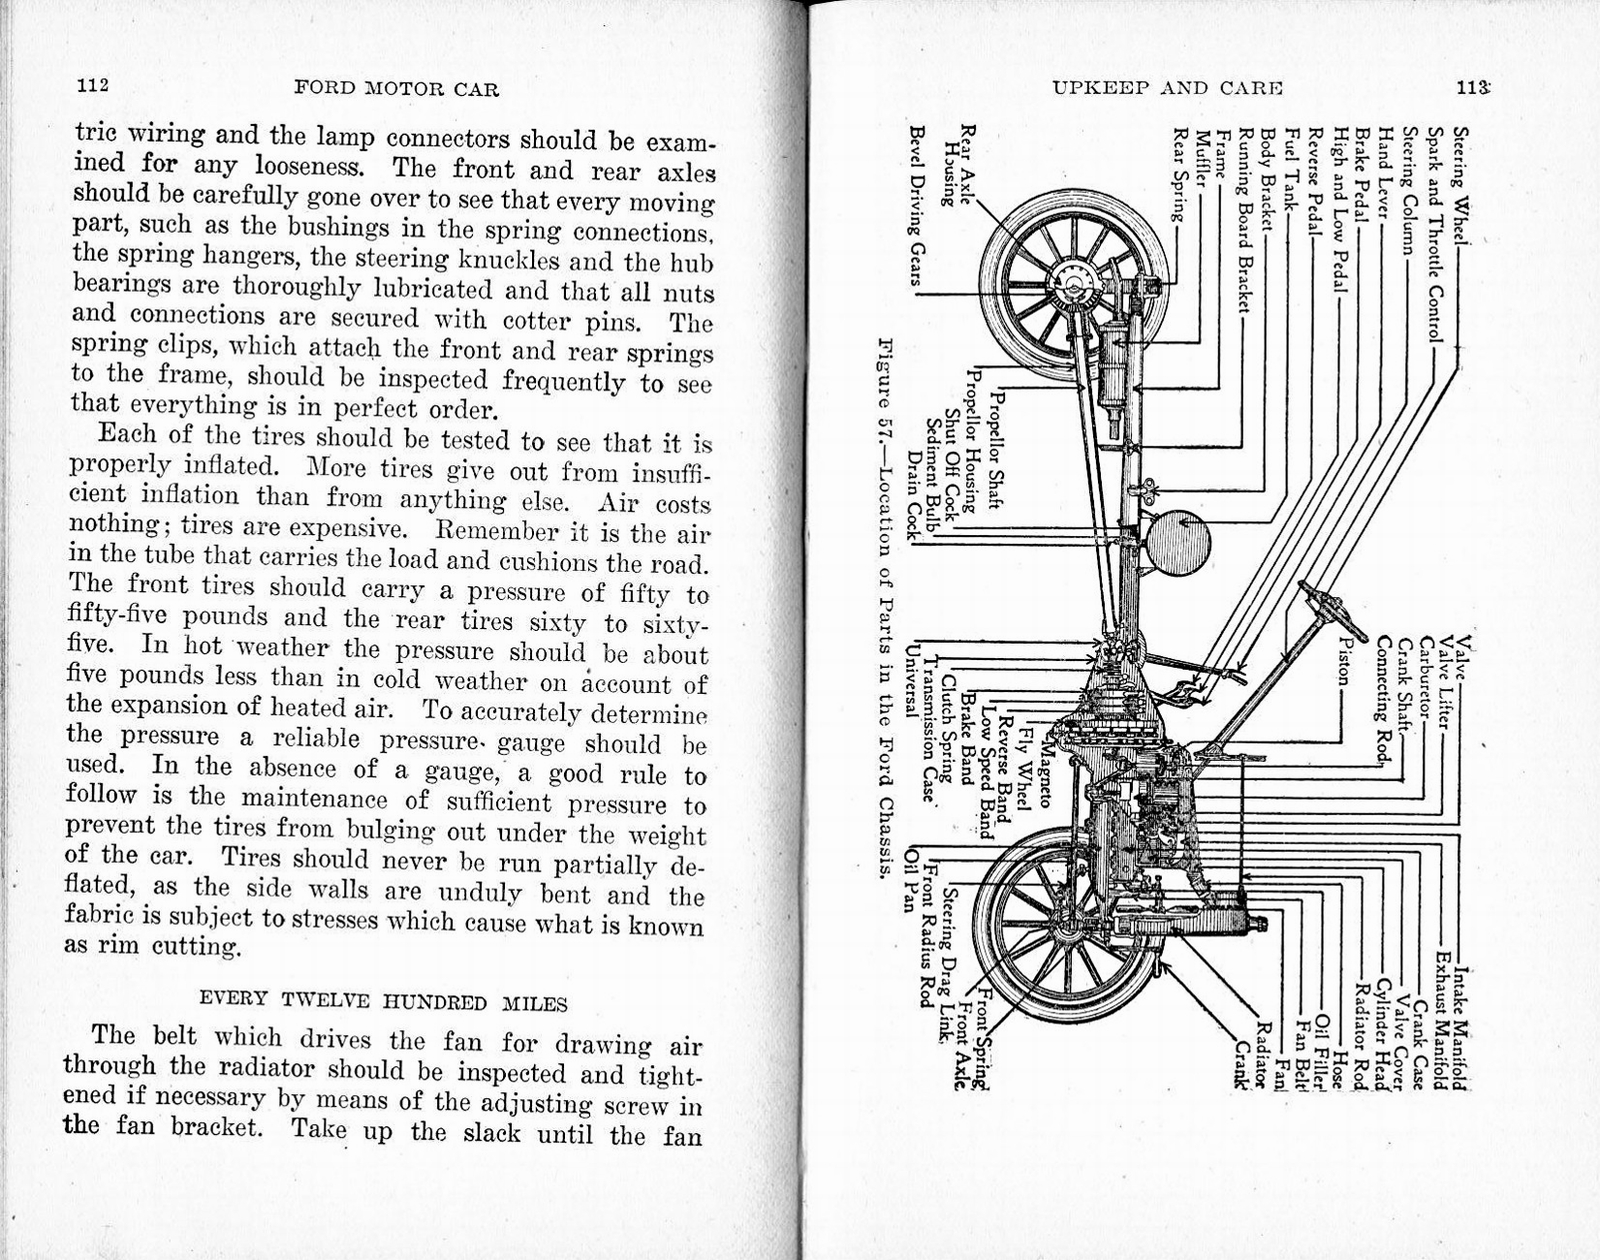 n_1917 Ford Car & Truck Manual-112-113.jpg